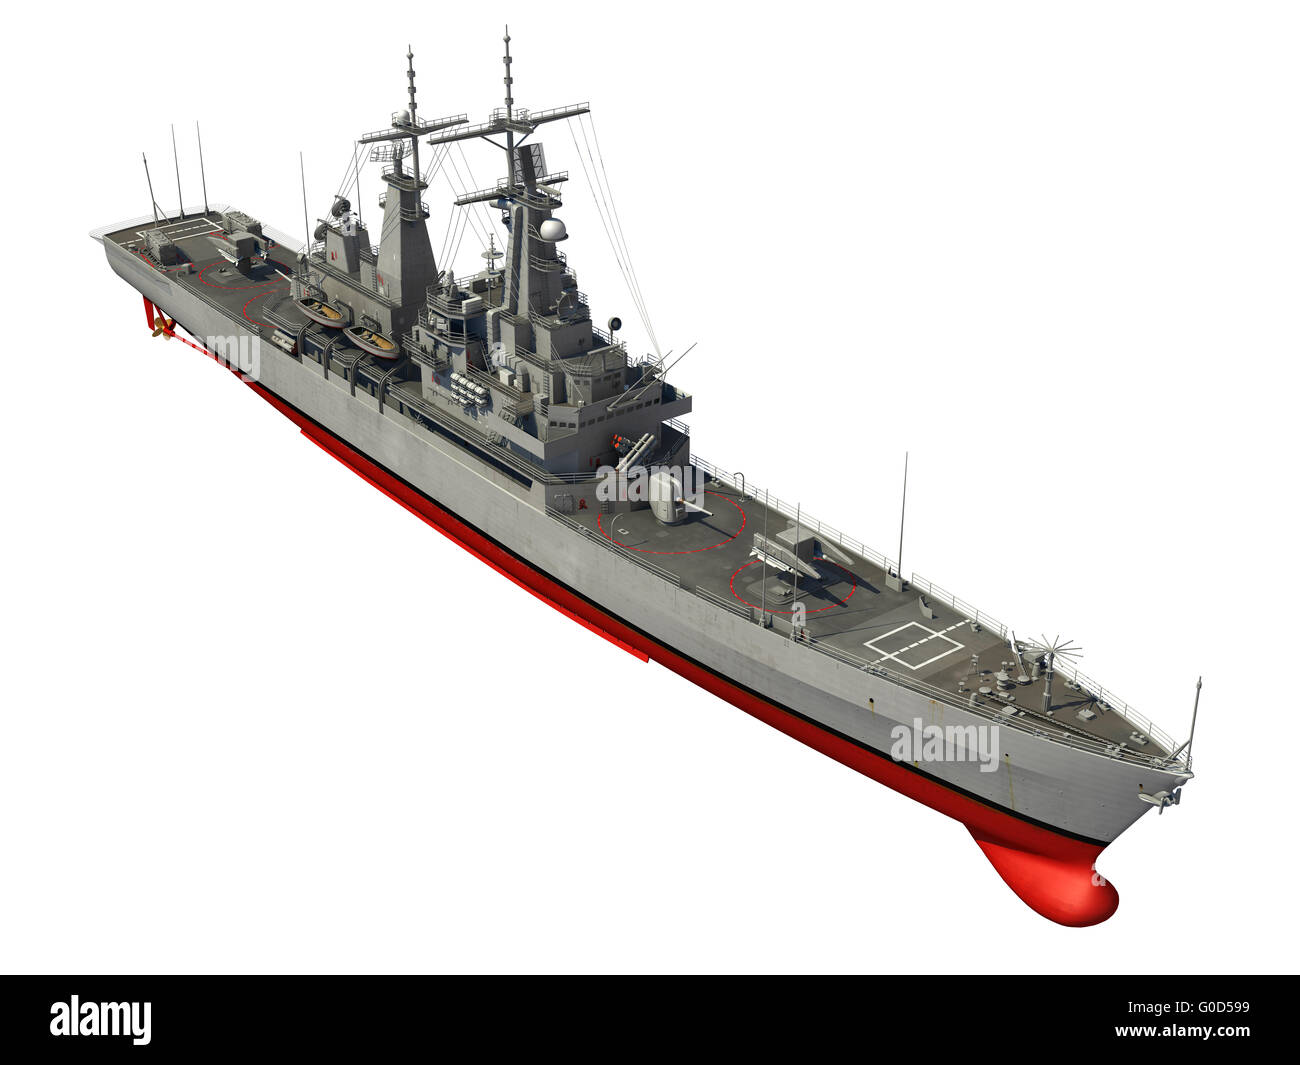 American Modern Warship Over White Background. 3D Illustration. Stock Photo